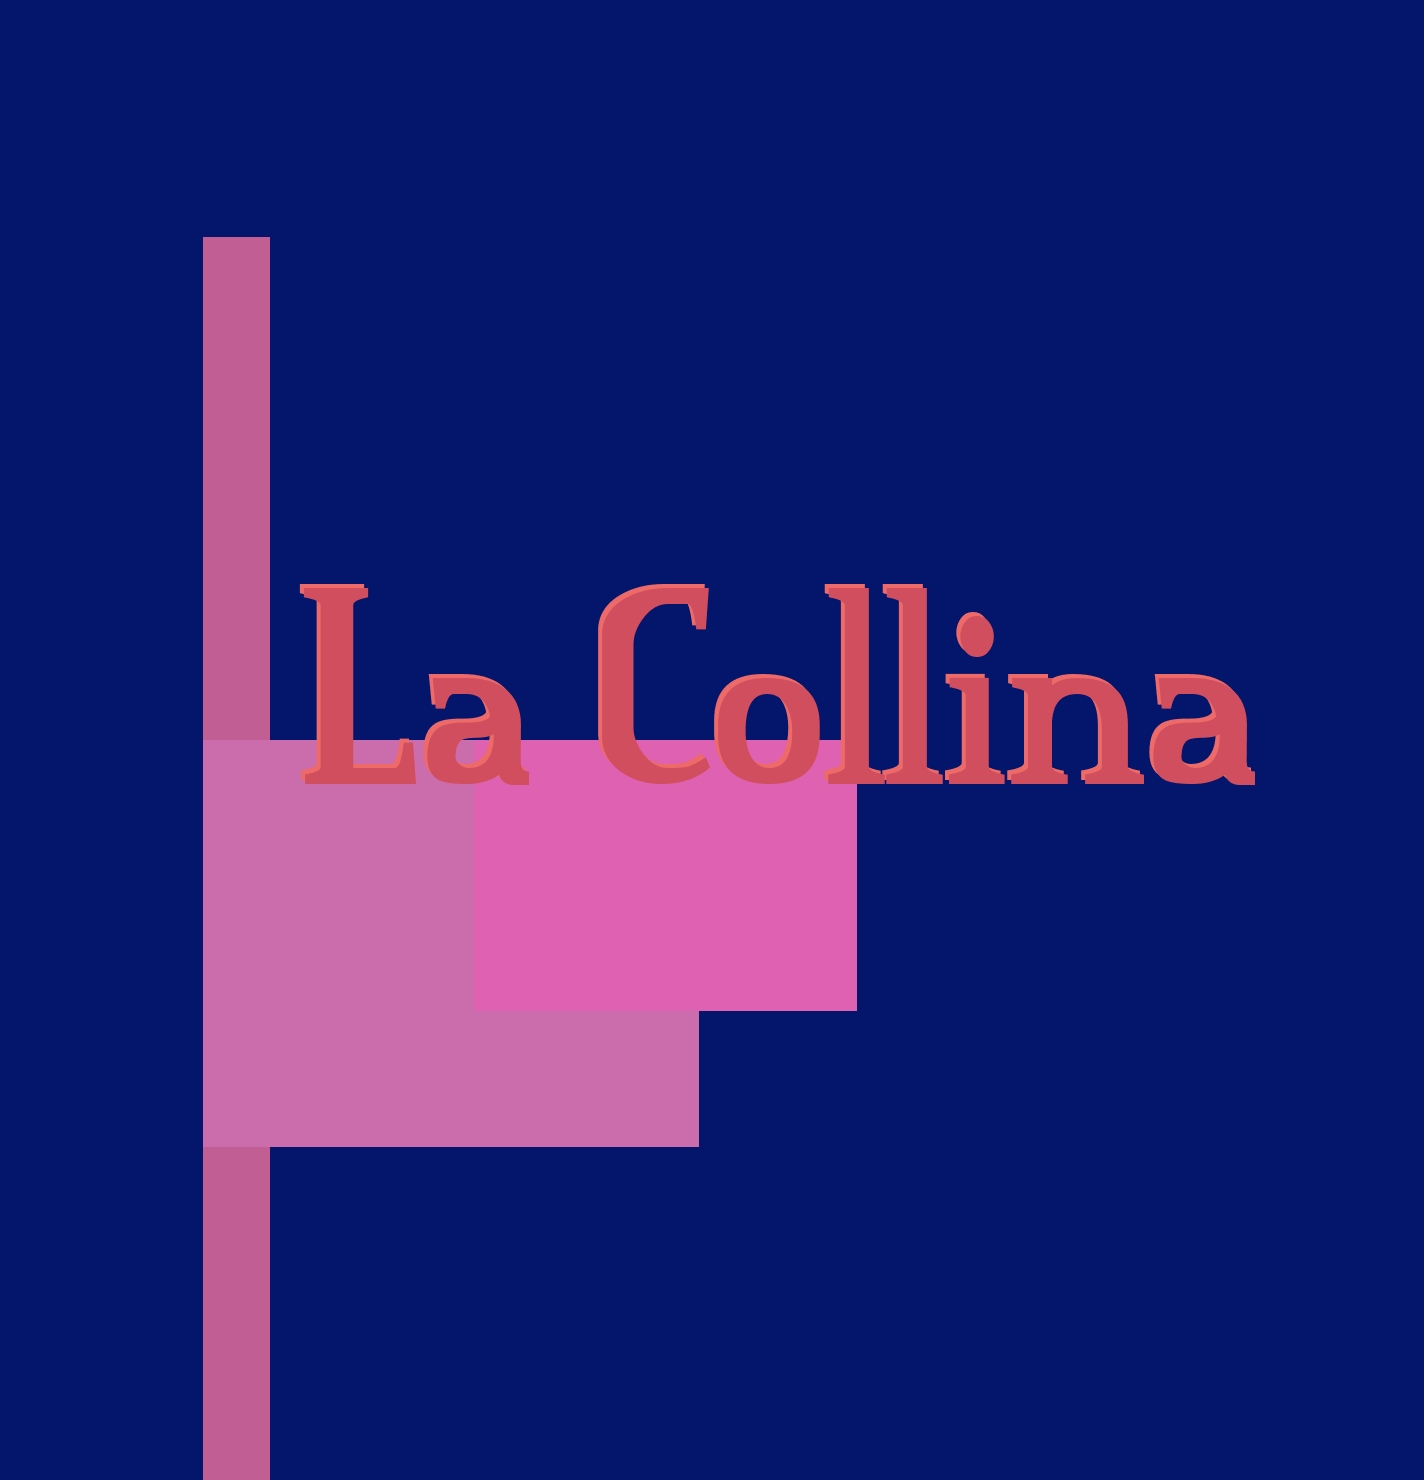 logo La Collina